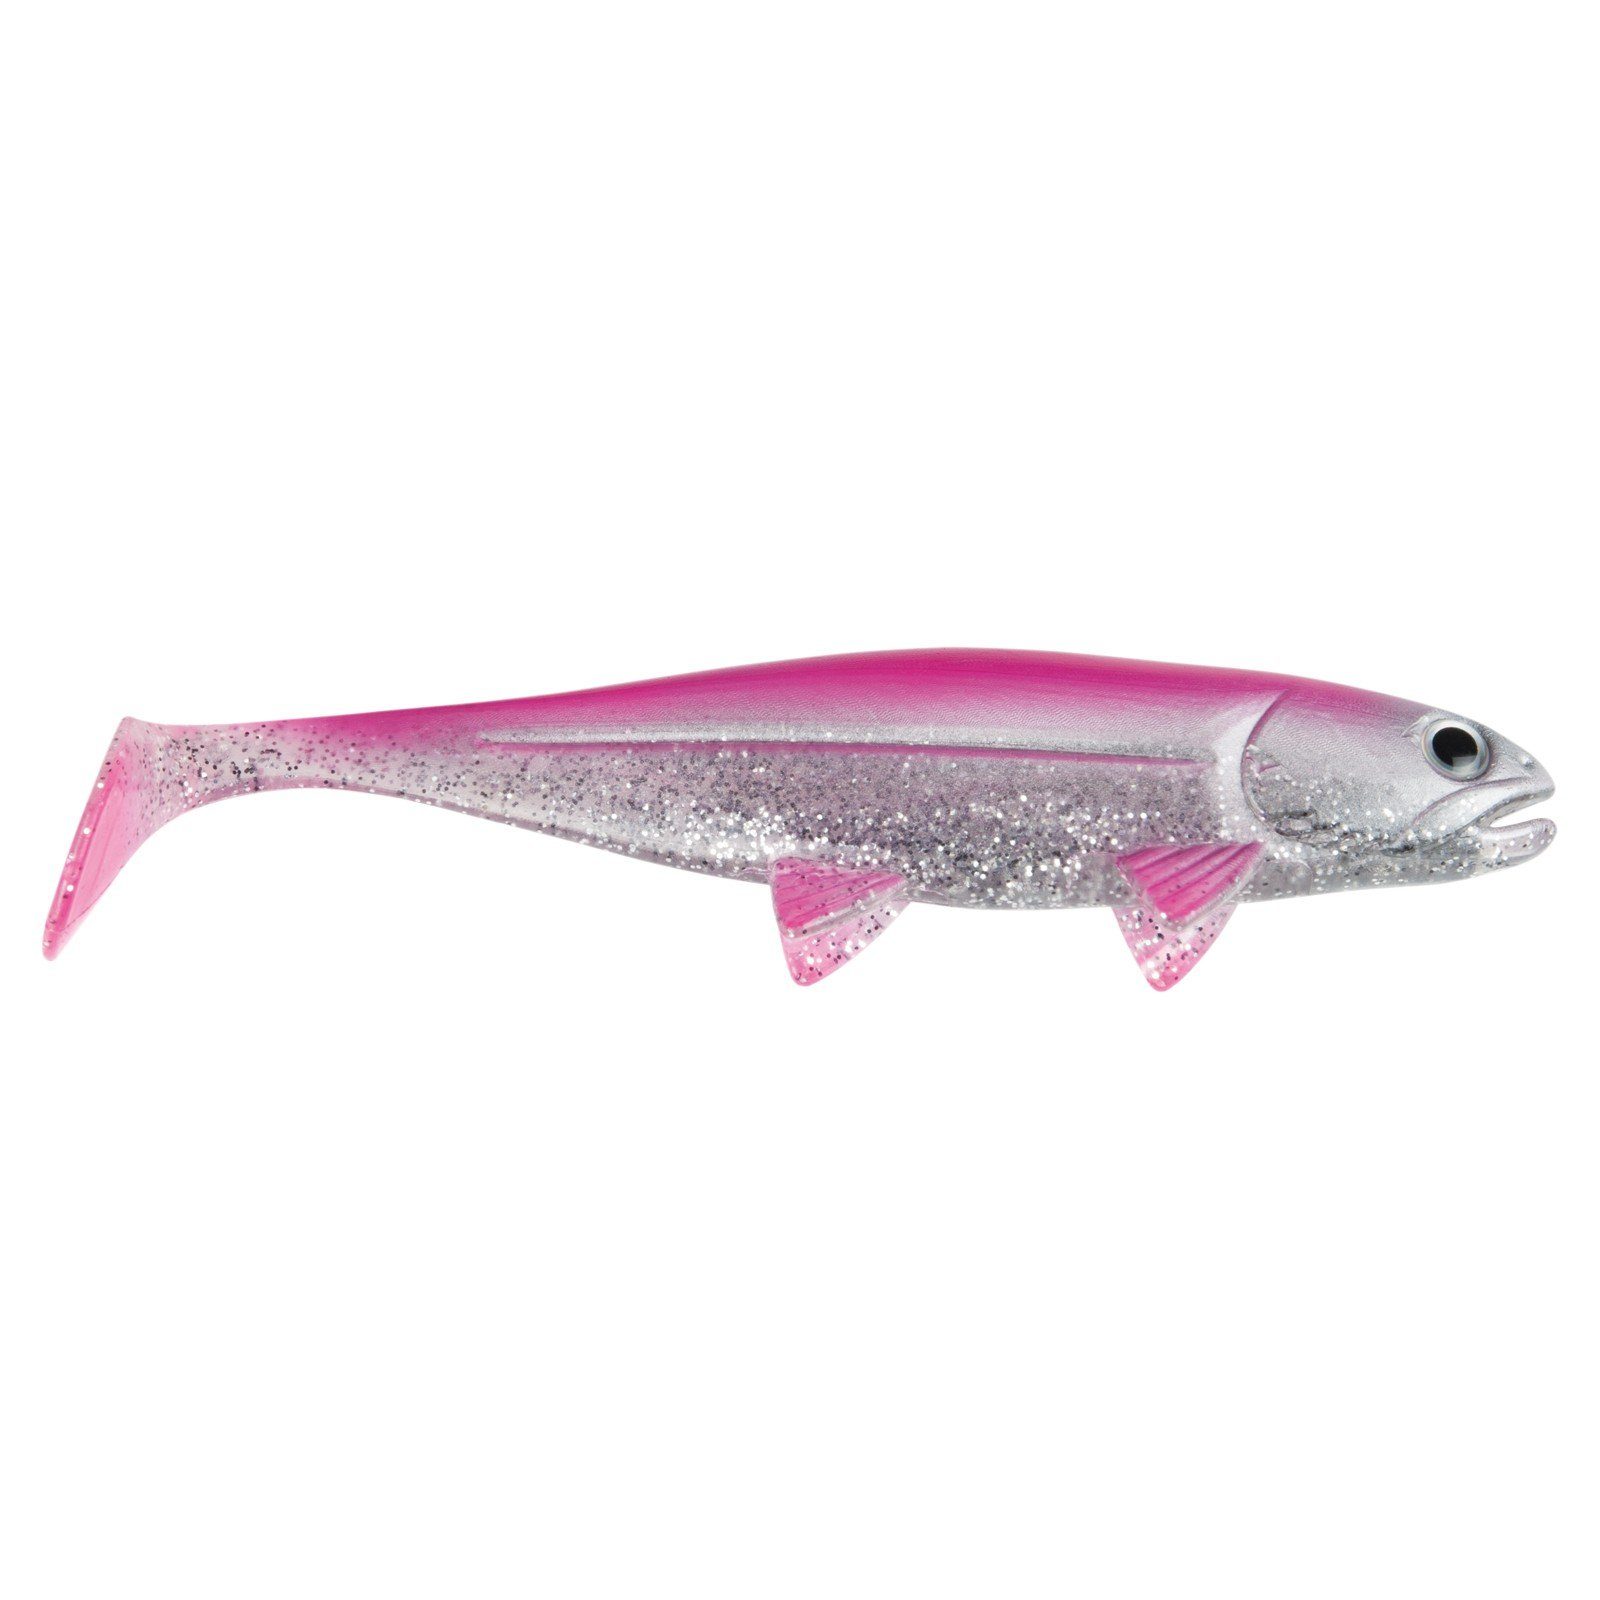 Fish Fishing Pretty The 15cm Kunstköder, Pink Jackson Jackson Gummifisch